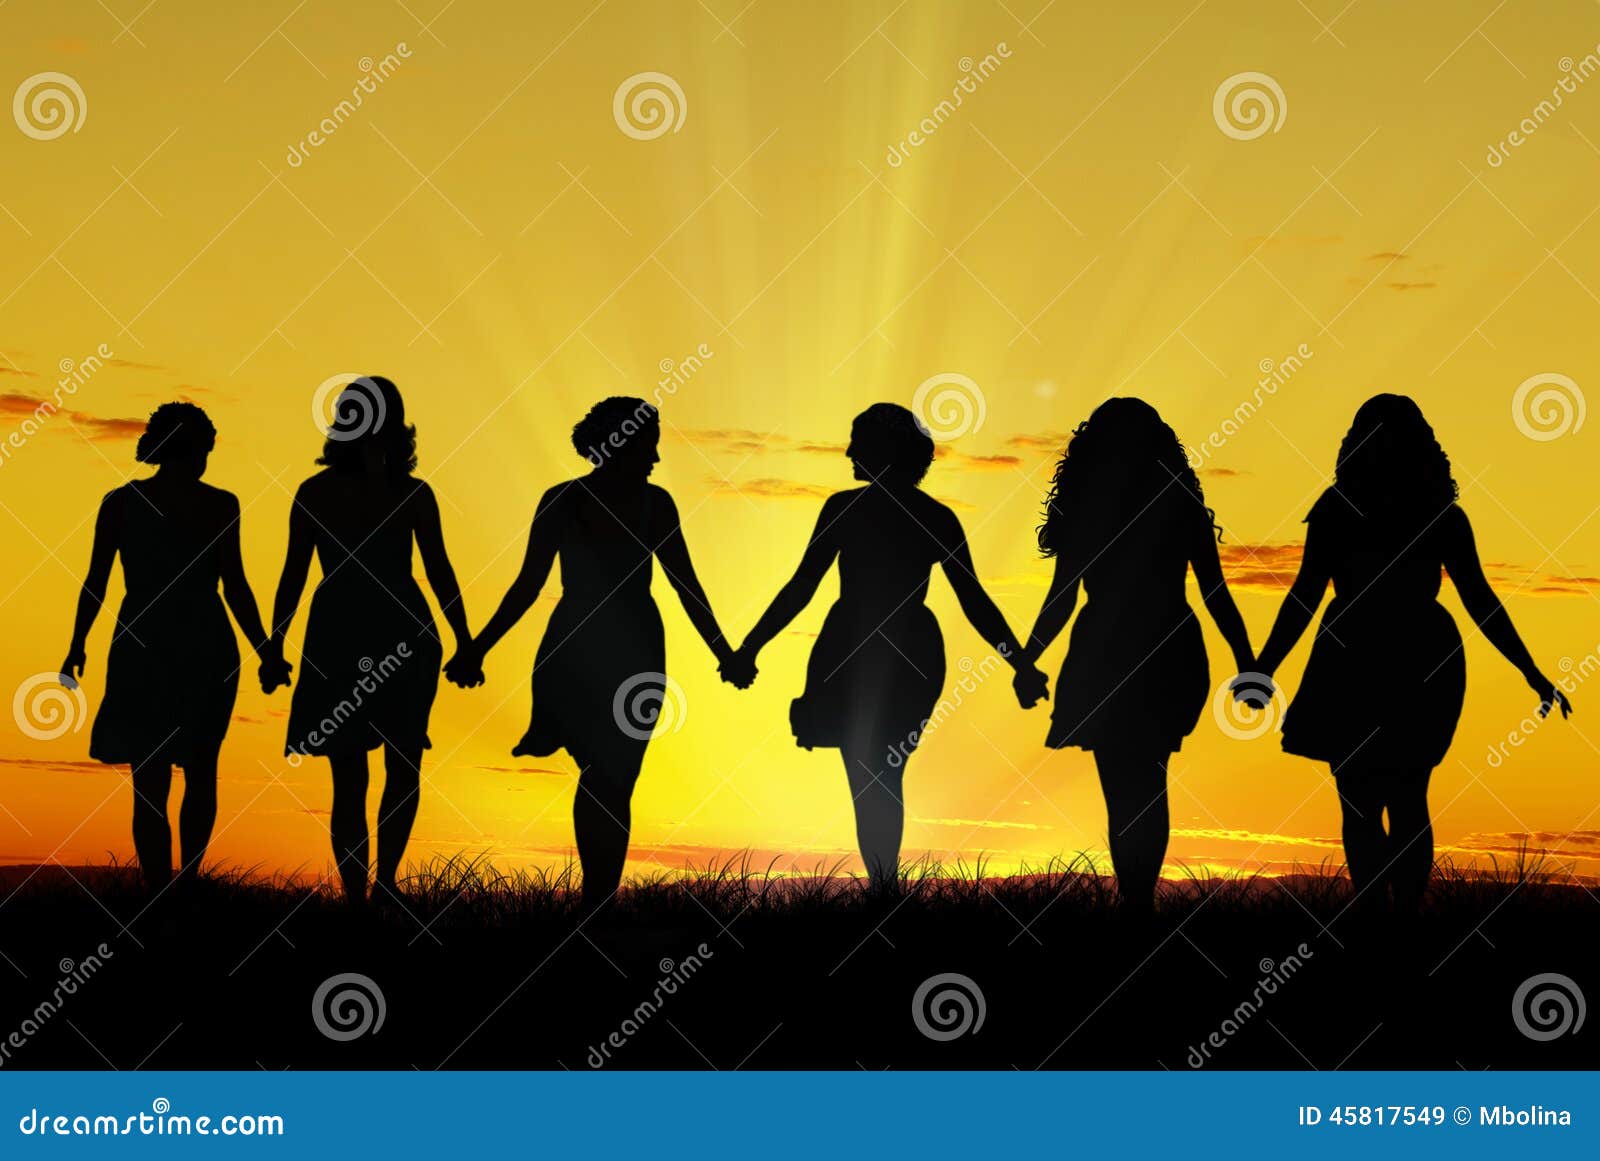 women walking hand in hand